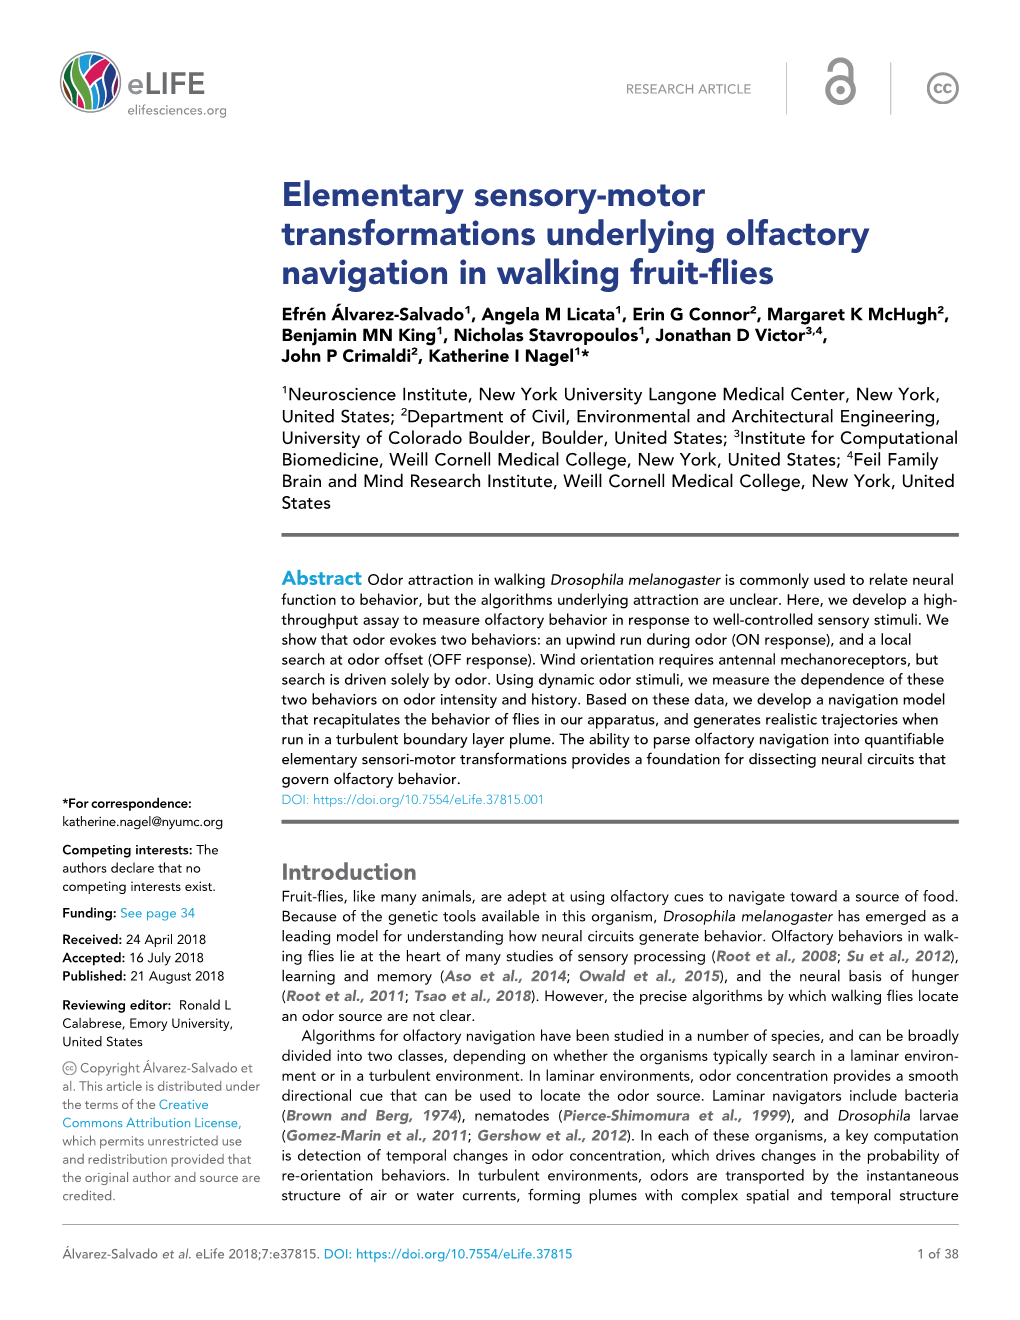 Elementary Sensory-Motor Transformations Underlying Olfactory Navigation in Walking Fruit-Flies